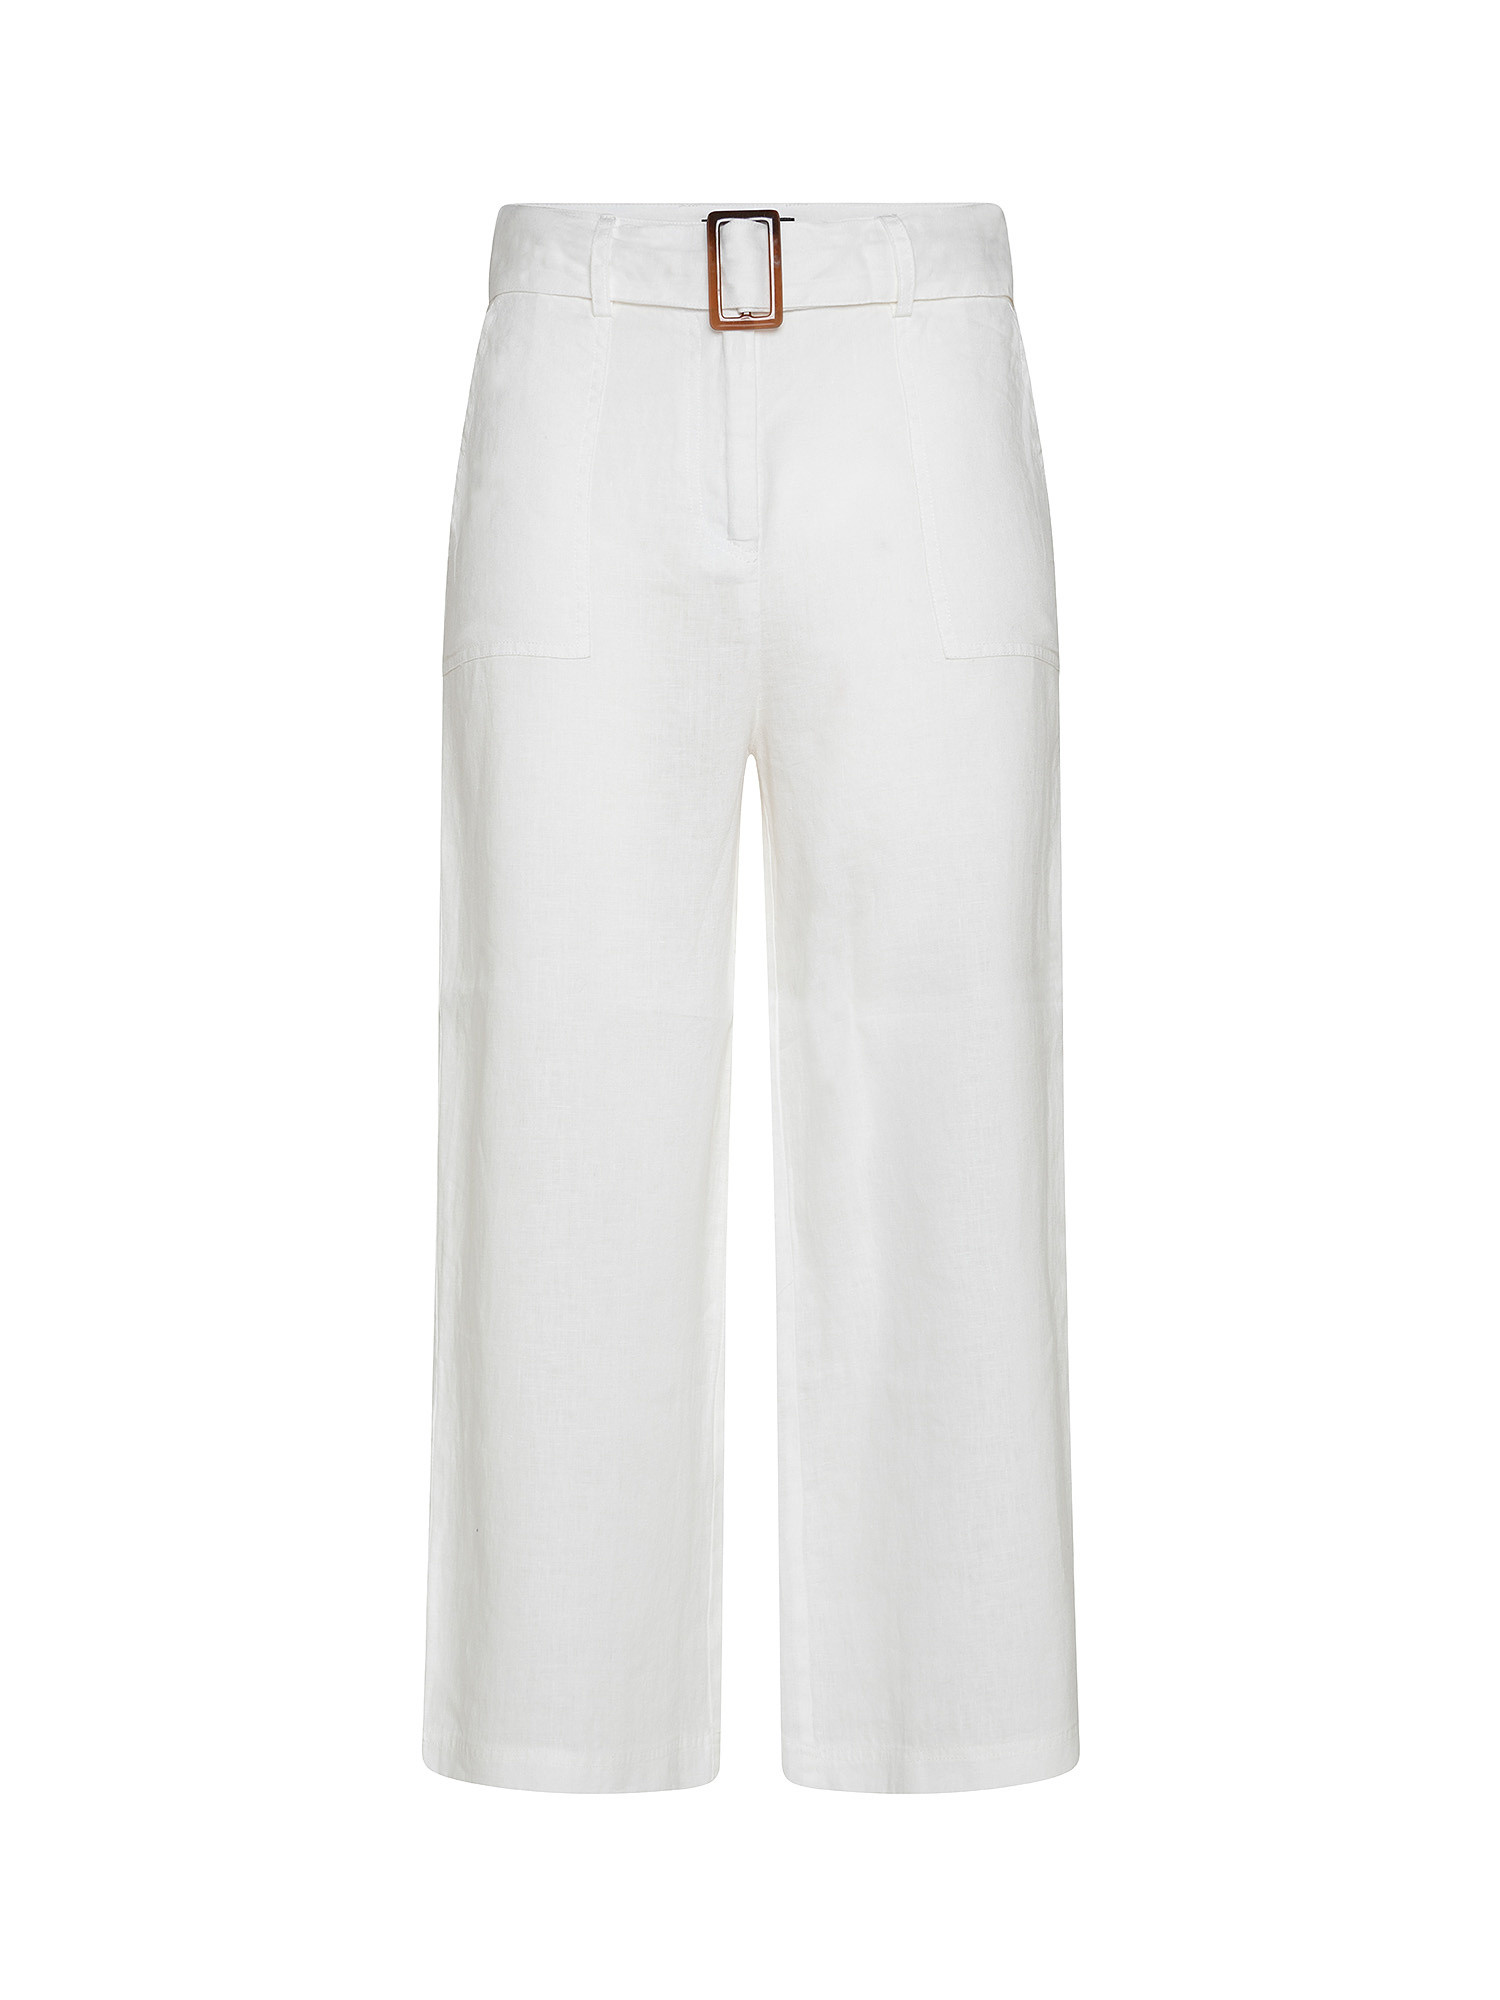 Pantalone 3/4 puro lino con cintura, Bianco, large image number 0